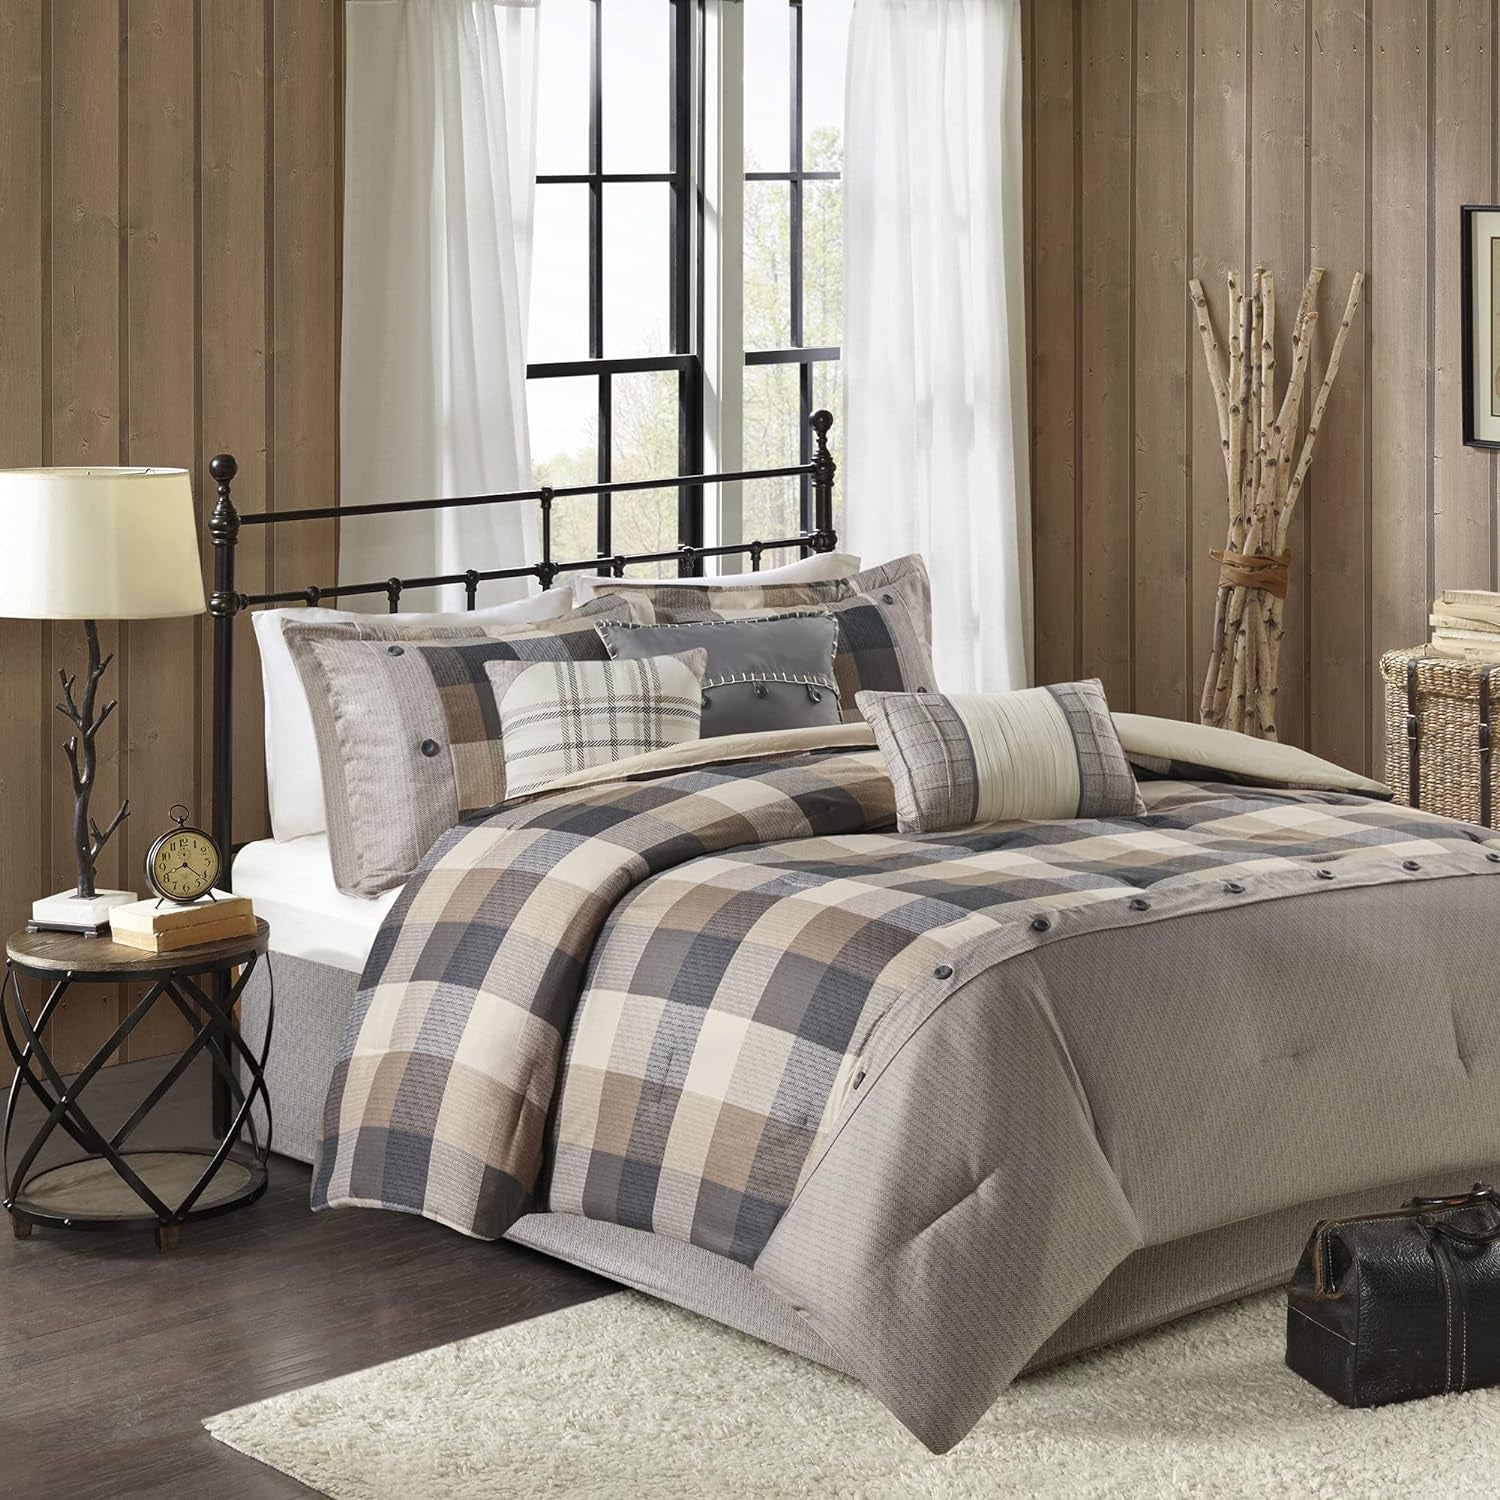 Ridge Comforter Set-Cabin Lodge Plaid Herringbone Design All Season down Alternative Cozy Bedding with Matching Bedskirt, Shams, Decorative Pillow, Queen(90"X90"), Neutral 7 Piece